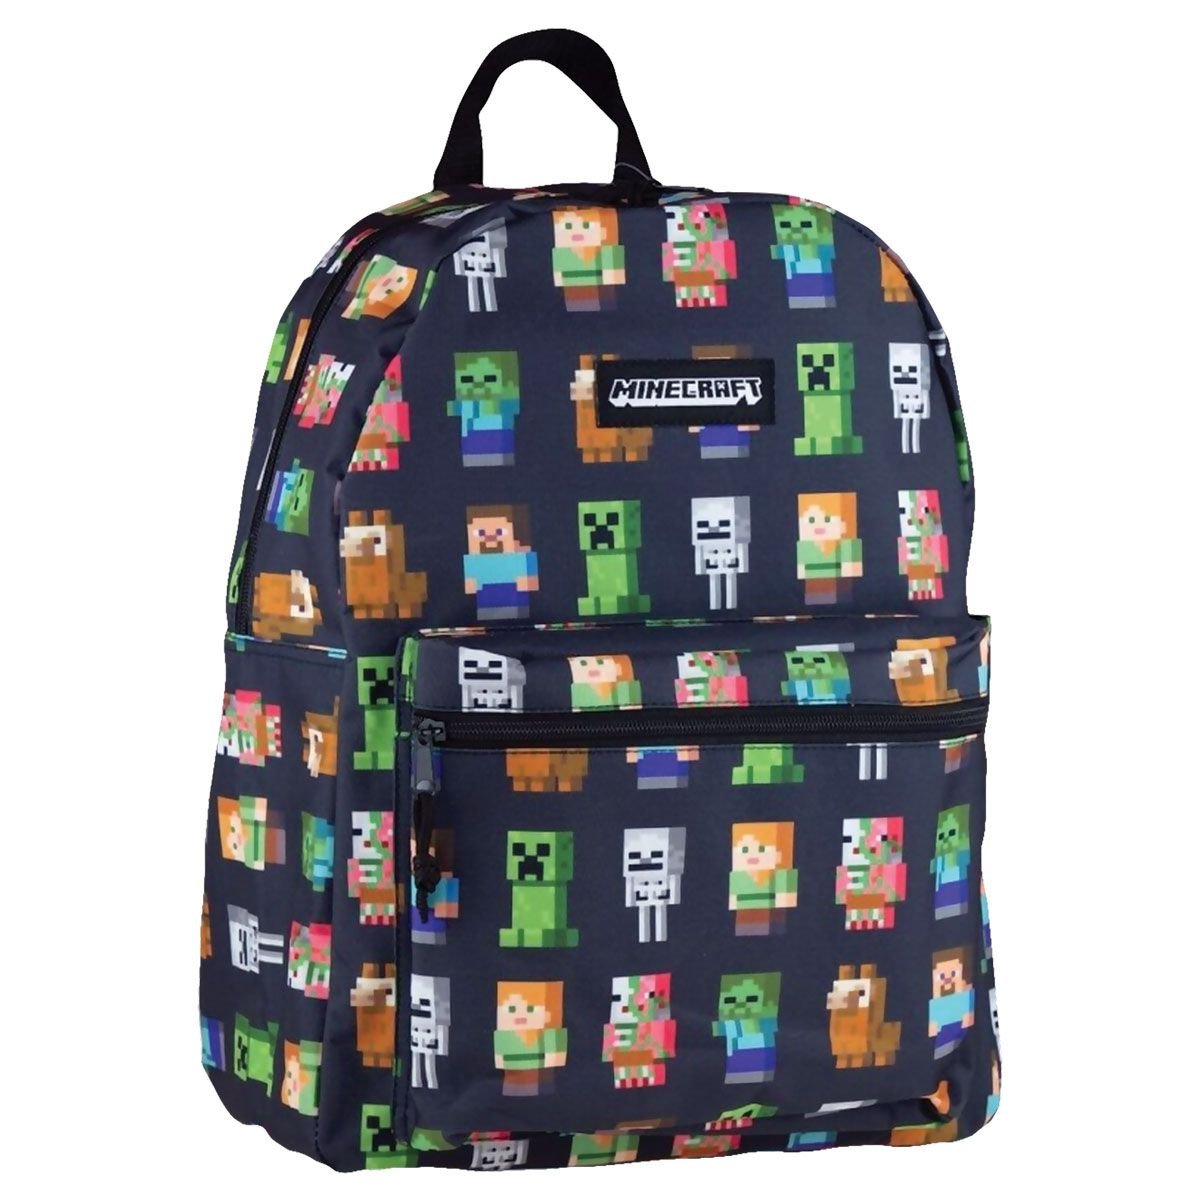 Just Toys Minecraft Backpack Hangers Blind Bag | GameStop